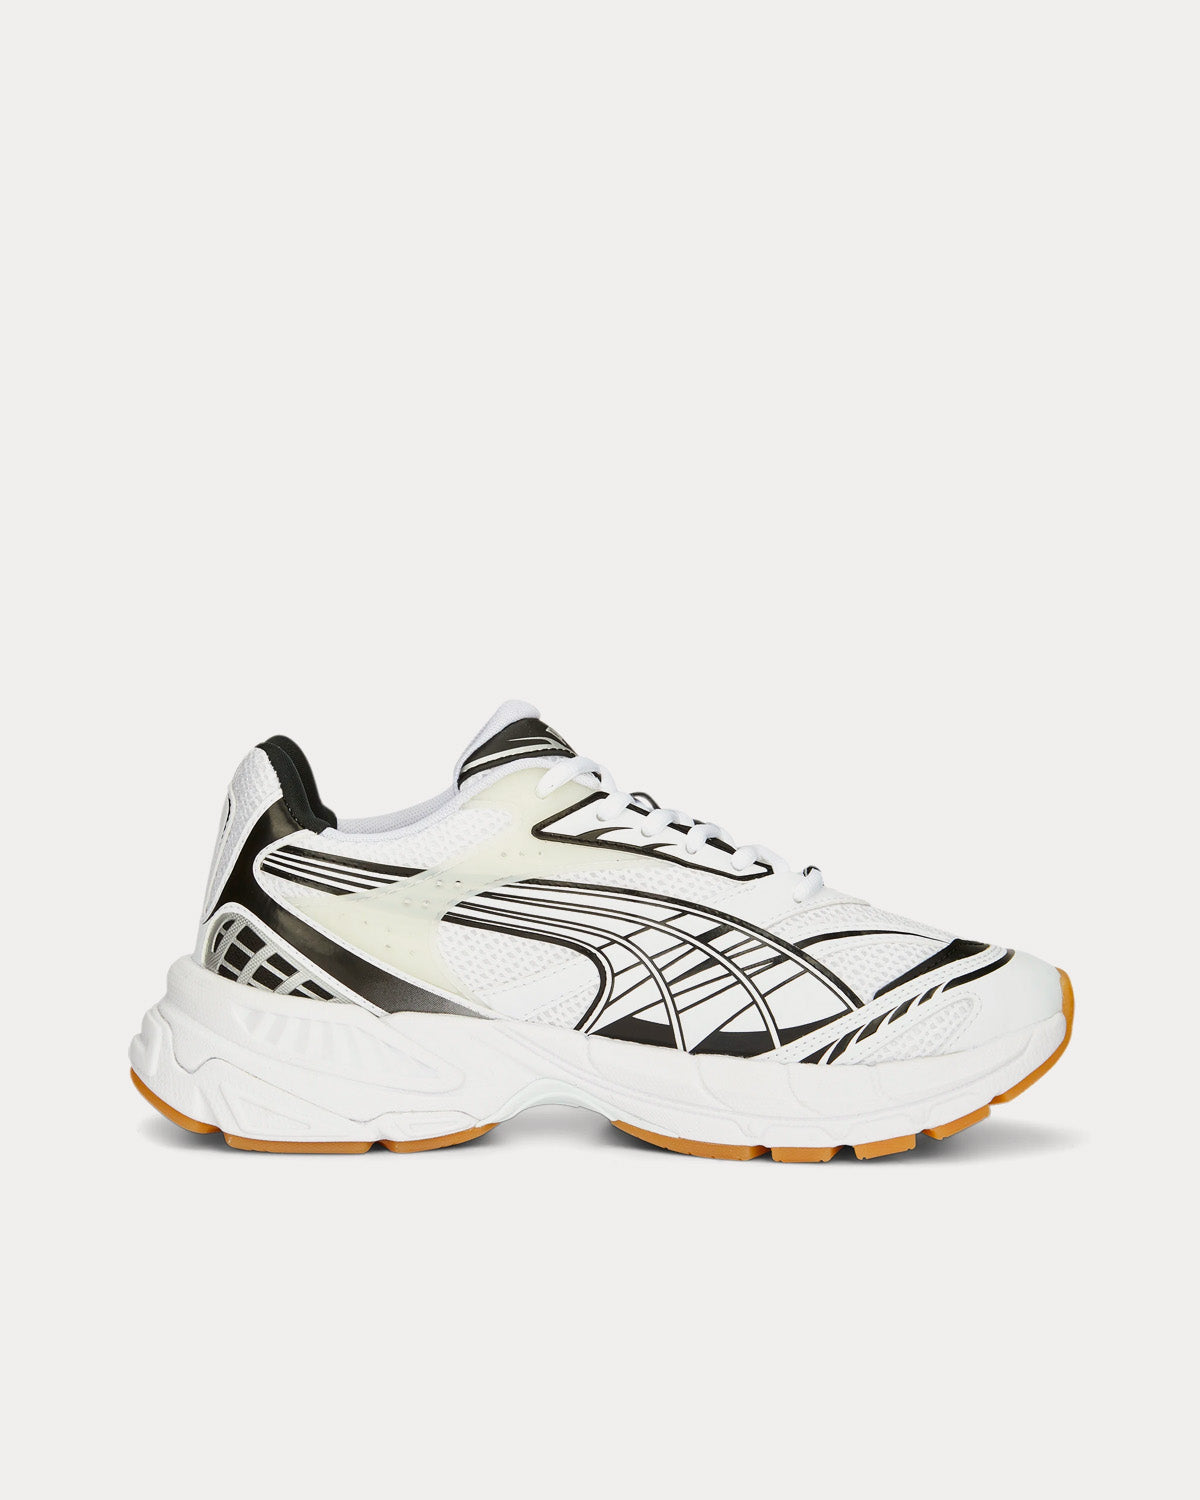 Puma - Velophasis Technisch White / Black Low Top Sneakers